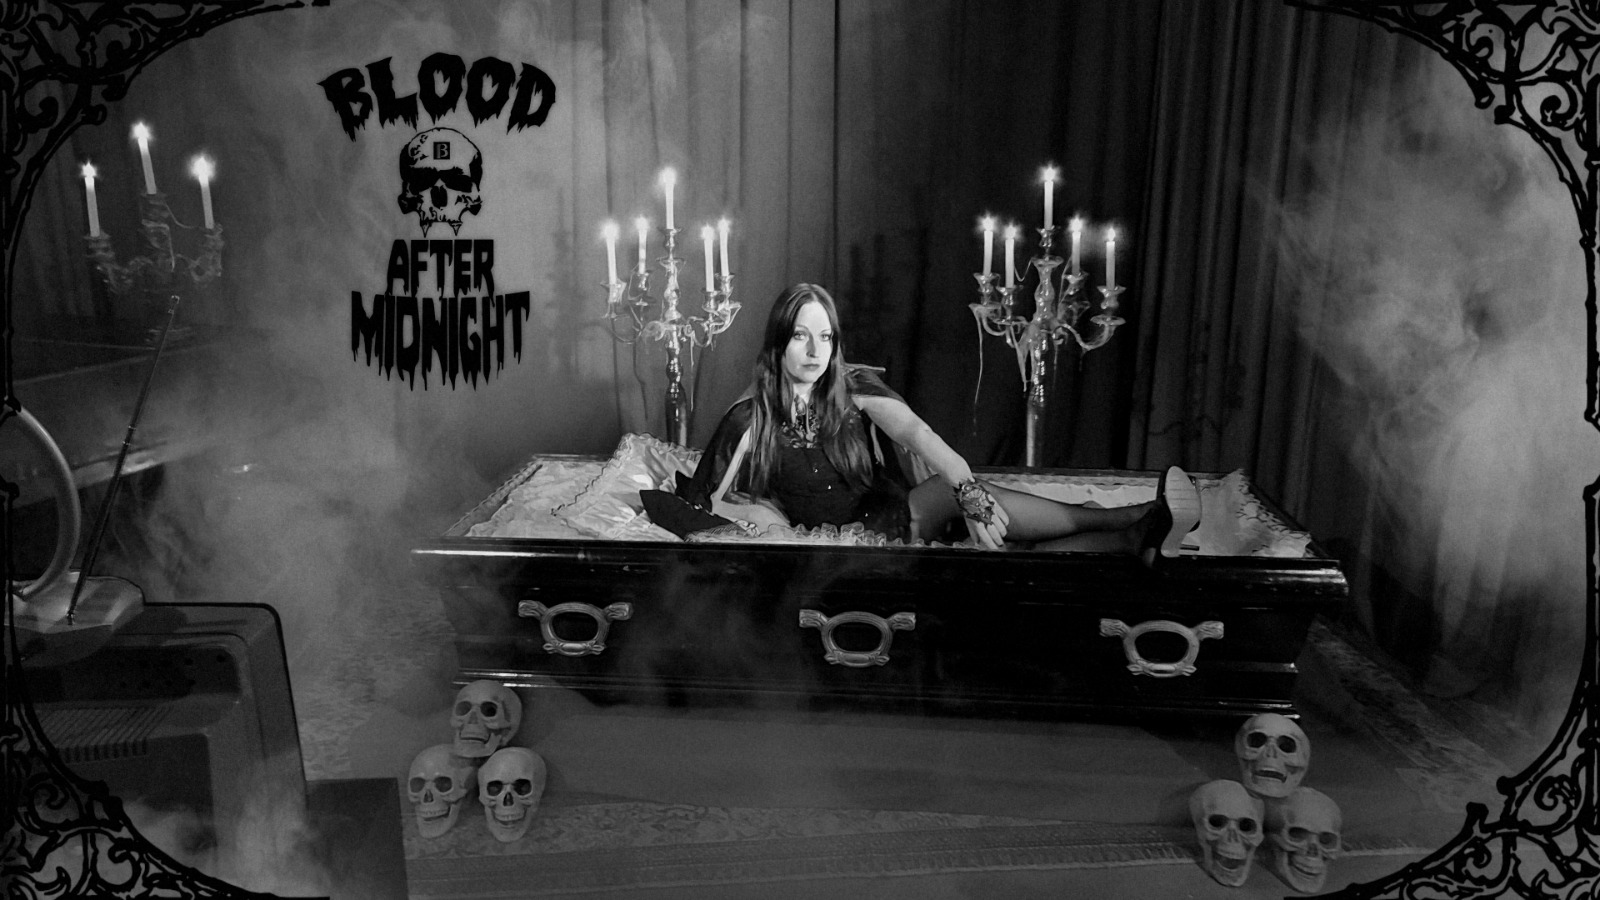 Blood_after-Midnight_SW_Vampirin01.jpg